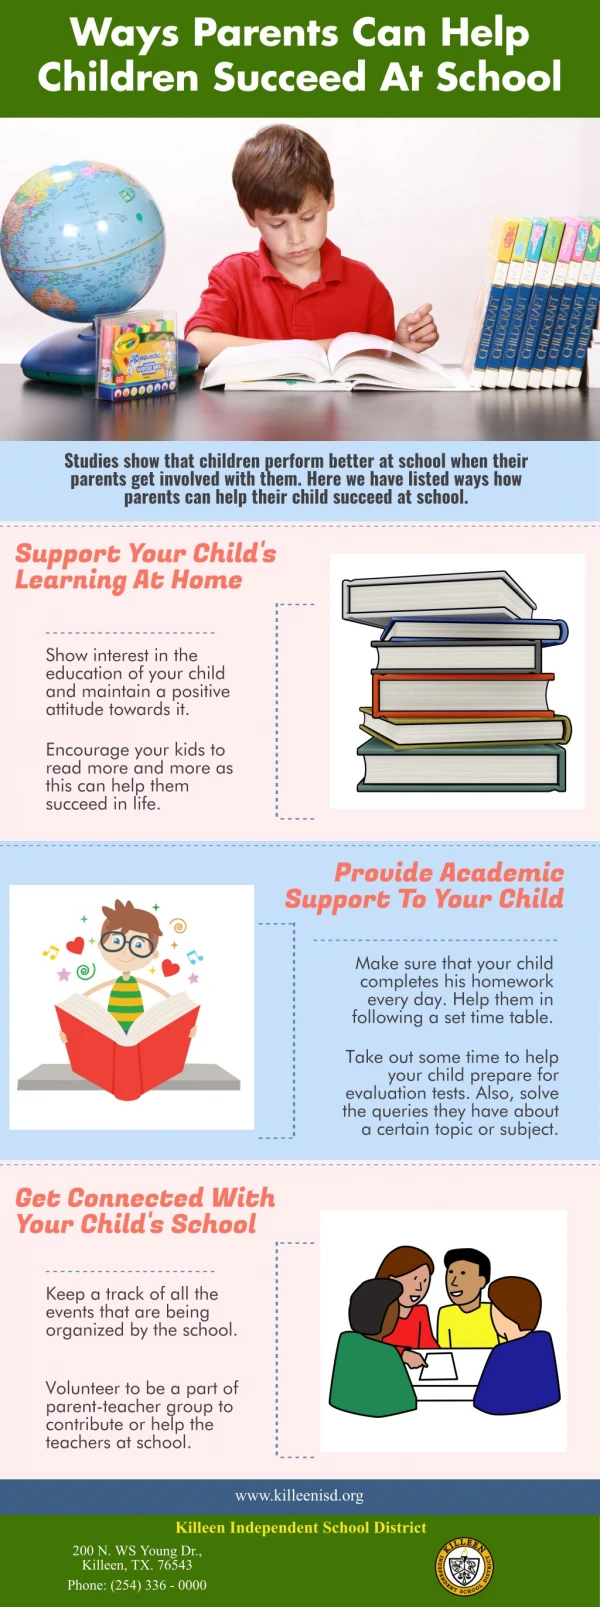 Ways Parents Can Help Children Succeed At School